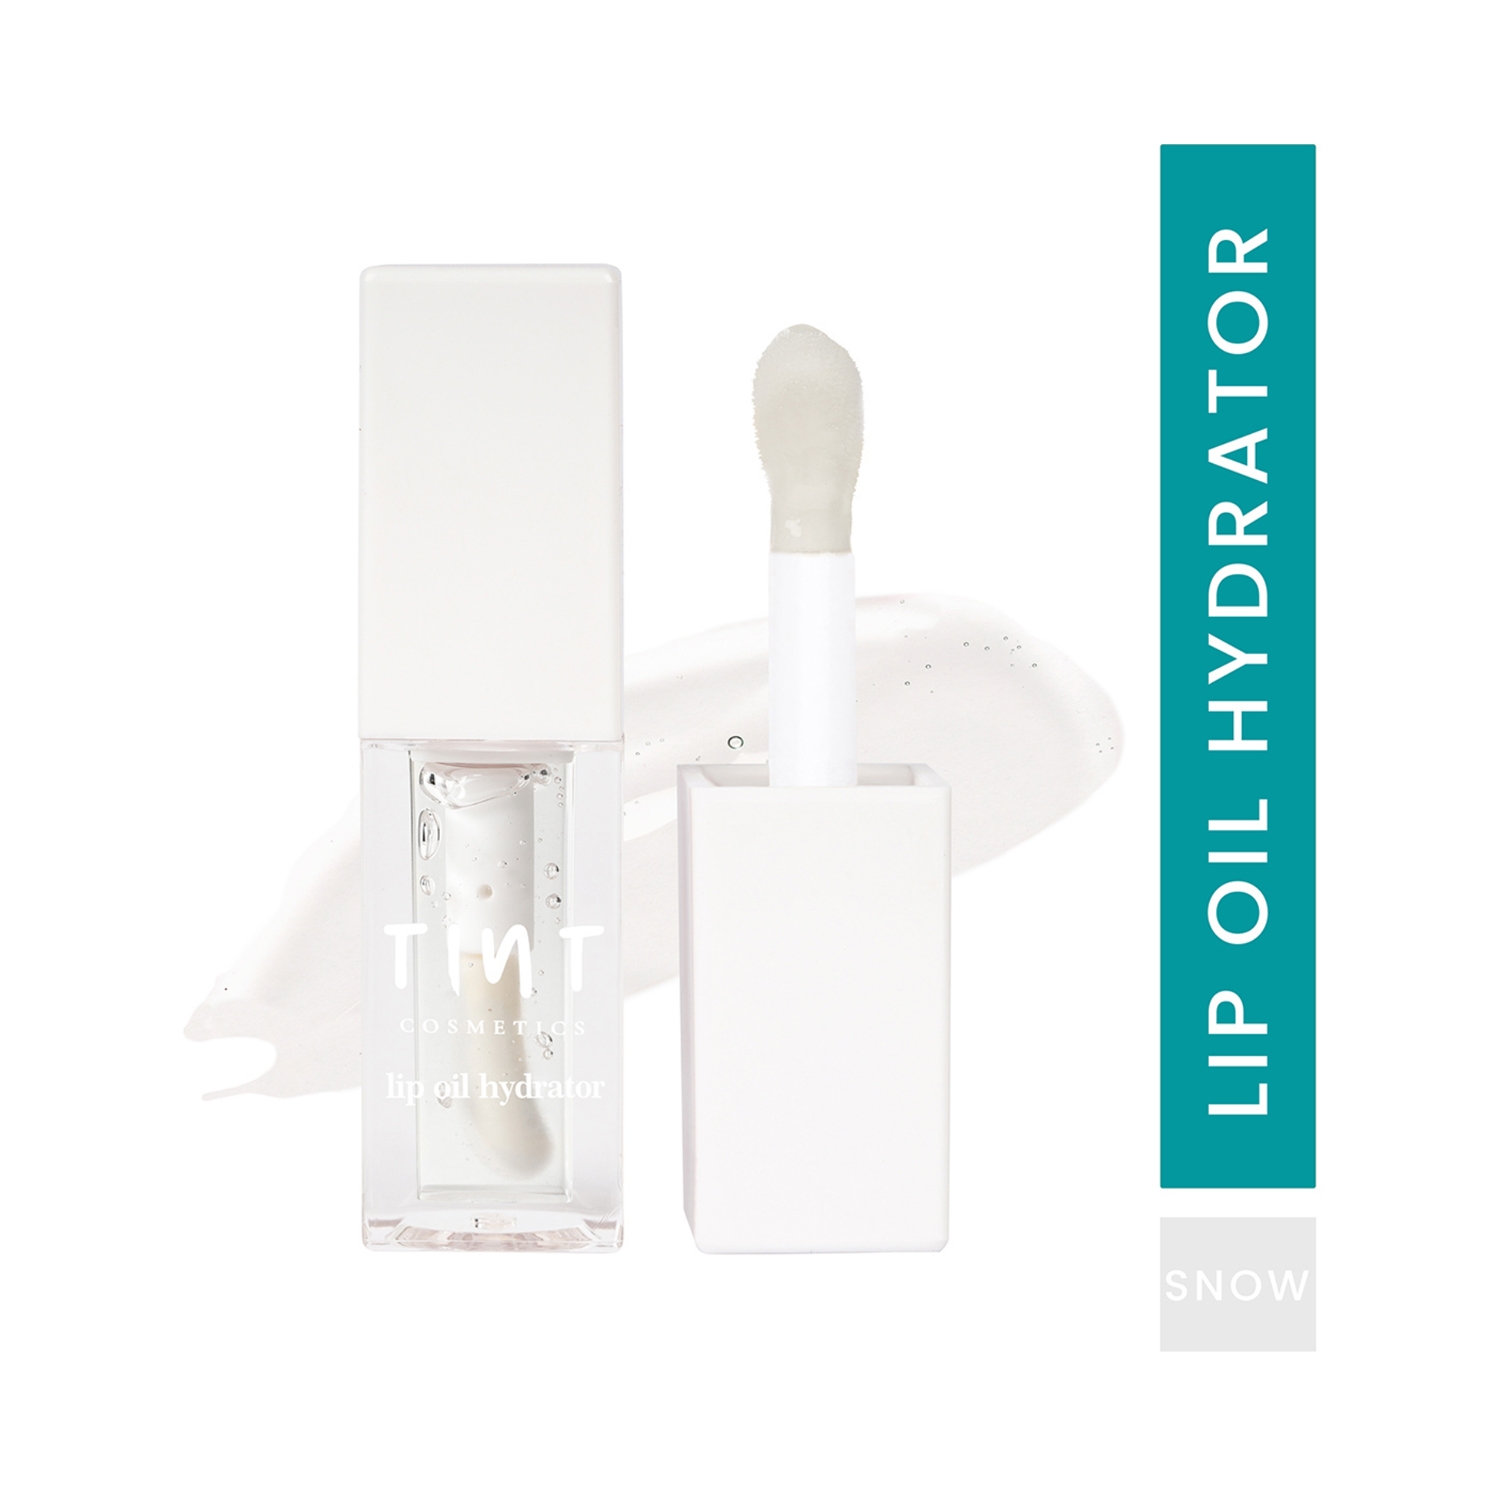 Tint Cosmetics | Tint Cosmetics Lip Oil Hydrator - Snow (6ml)